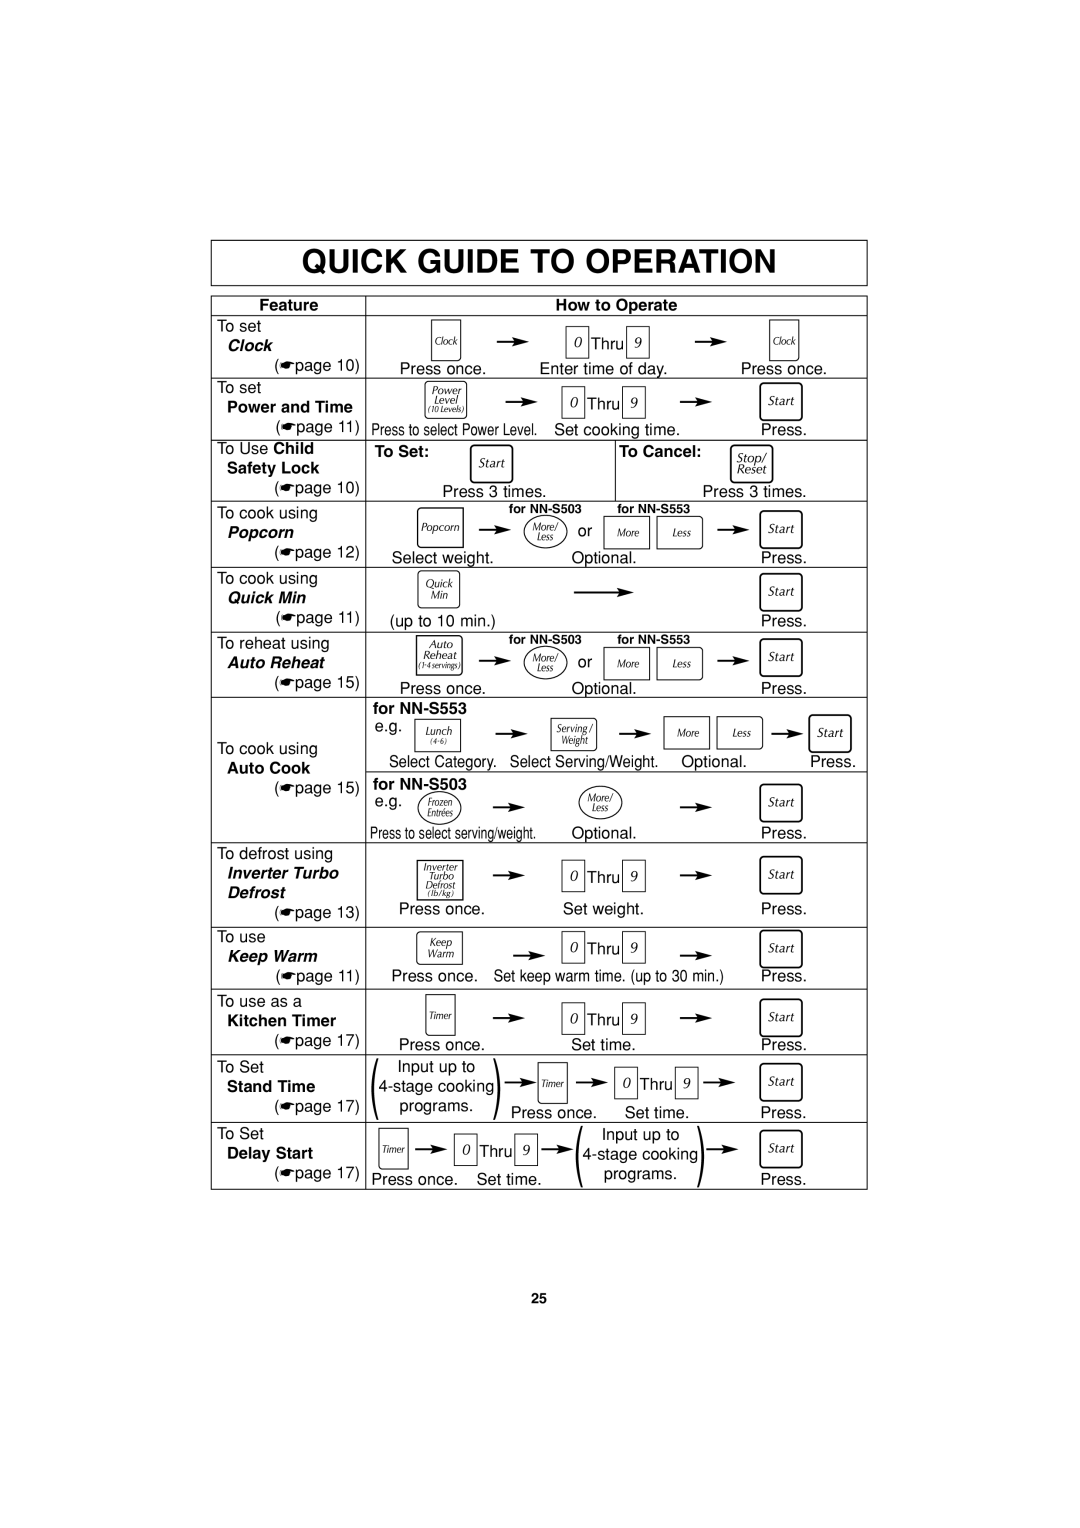 Panasonic NN-S503 Quick Guide To Operation, Clock, Popcorn, Quick Min, Auto Reheat, Inverter Turbo, Defrost, Keep Warm 